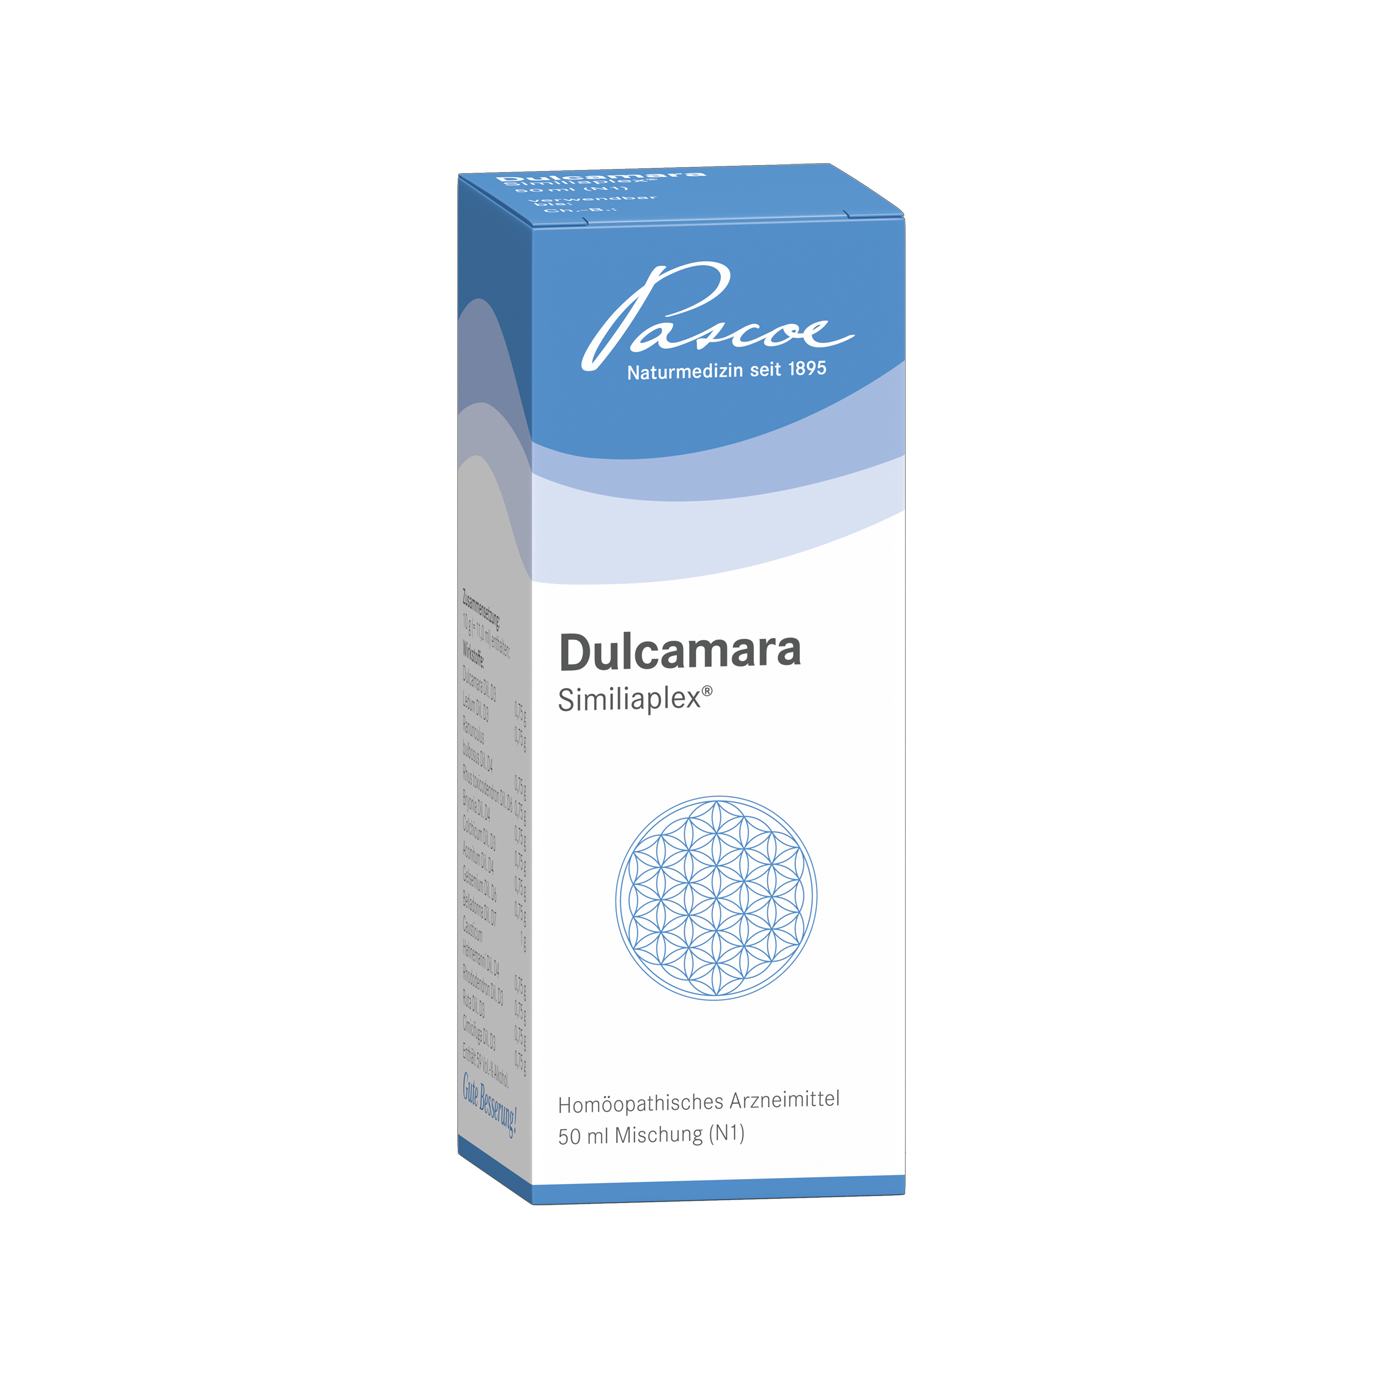 Dulcamara Similiaplex 50 ml Packshot PZN 01352155